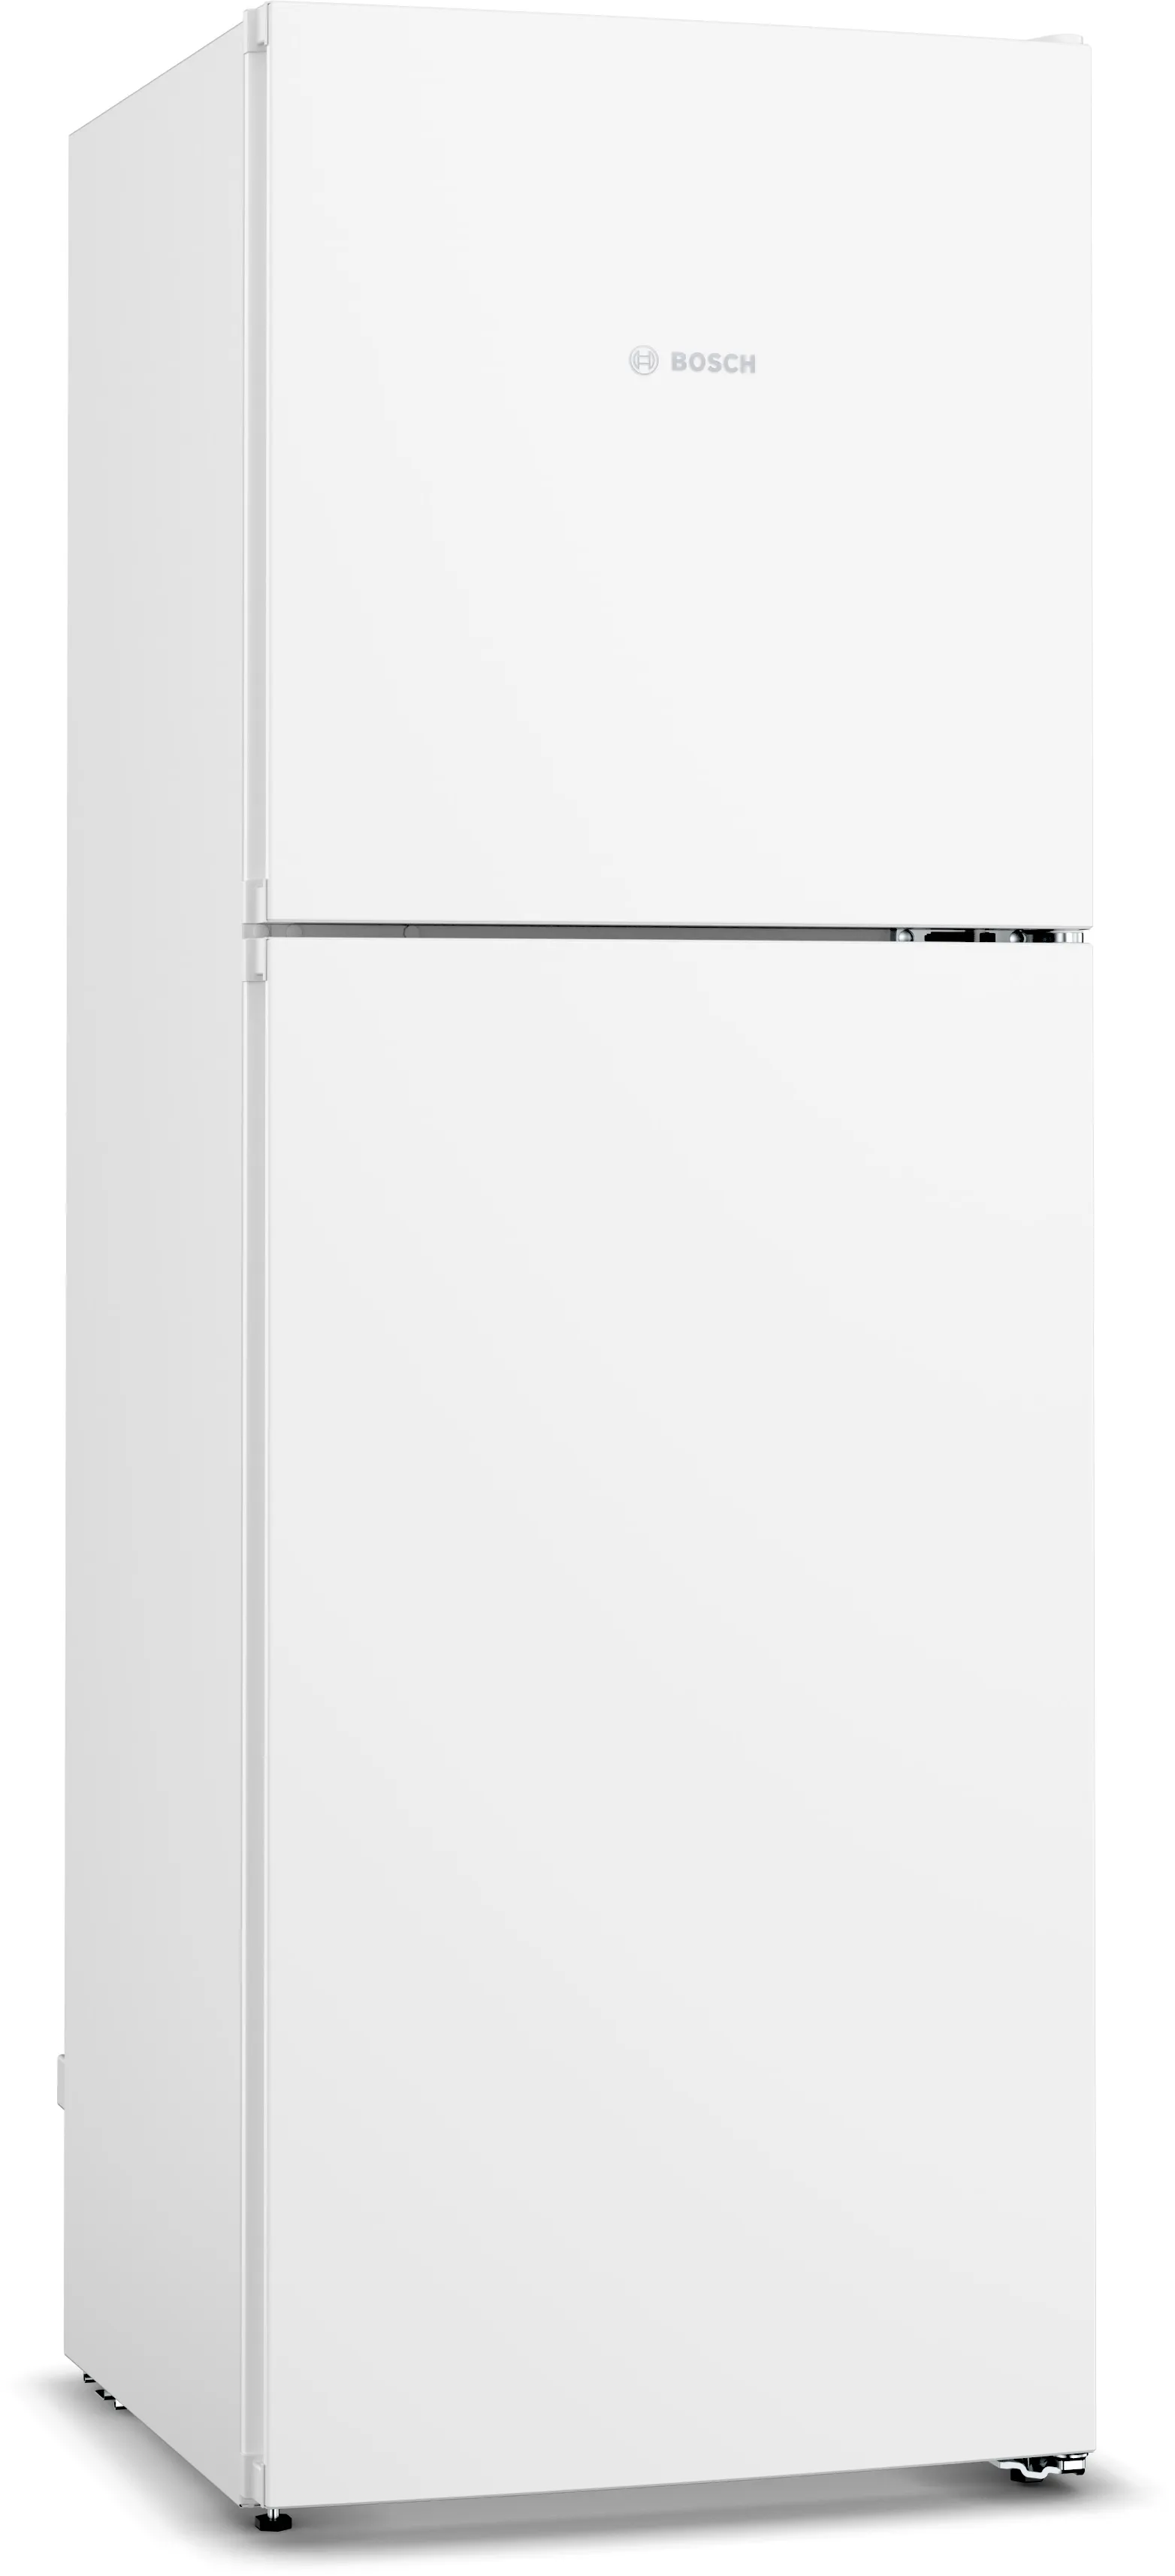 Series 2 free-standing fridge-freezer with freezer at top 171 x 60 cm White 